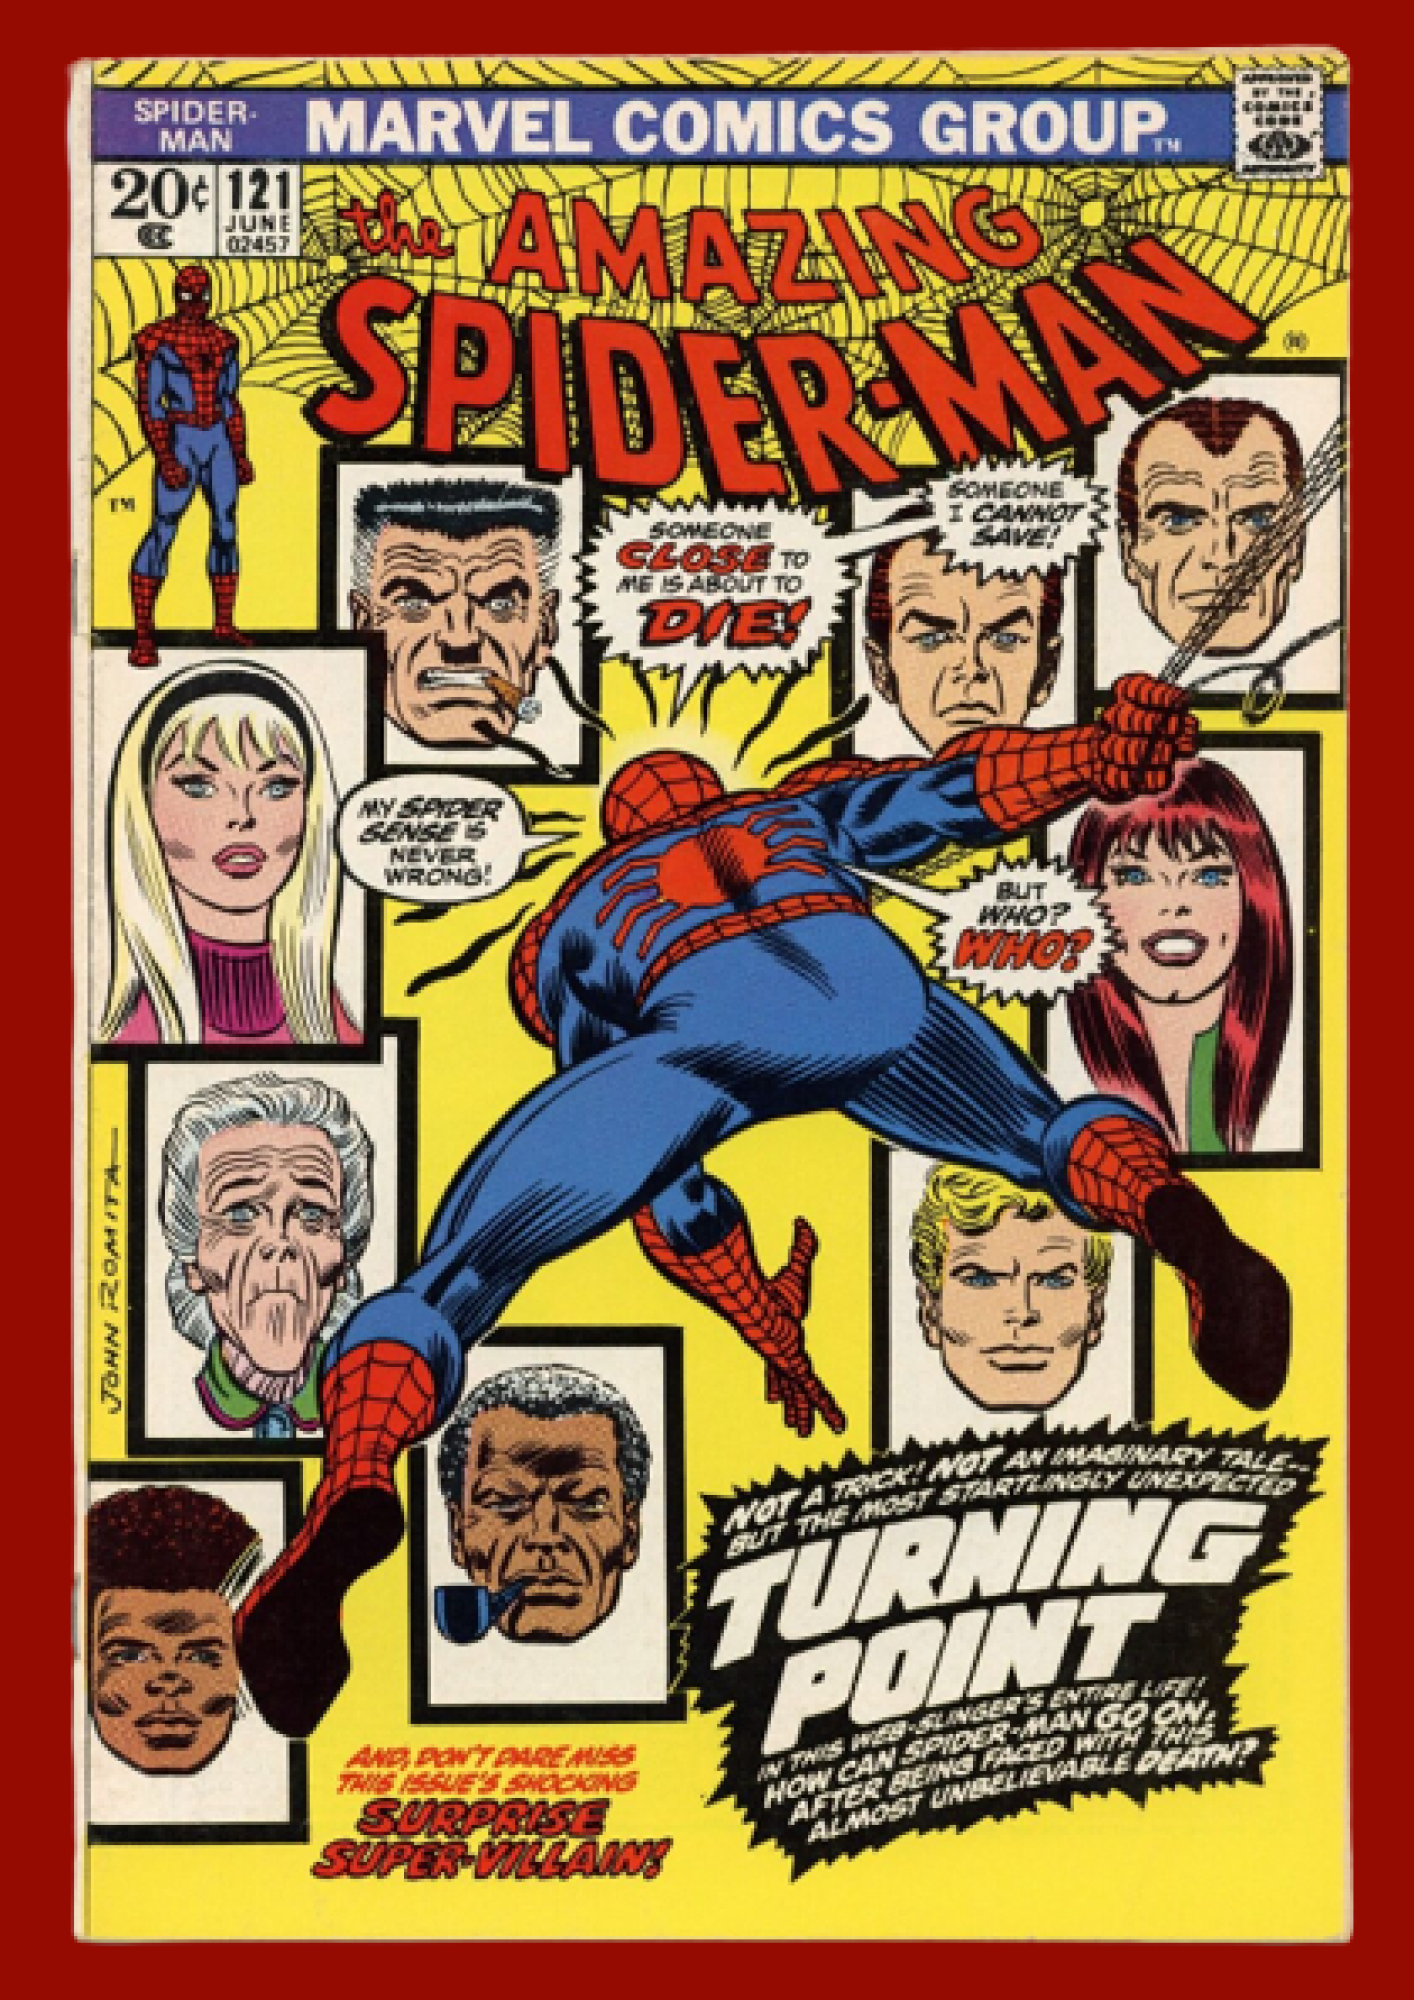 Amazing Spider-Man #121, Jun 1973, 6.0 FN